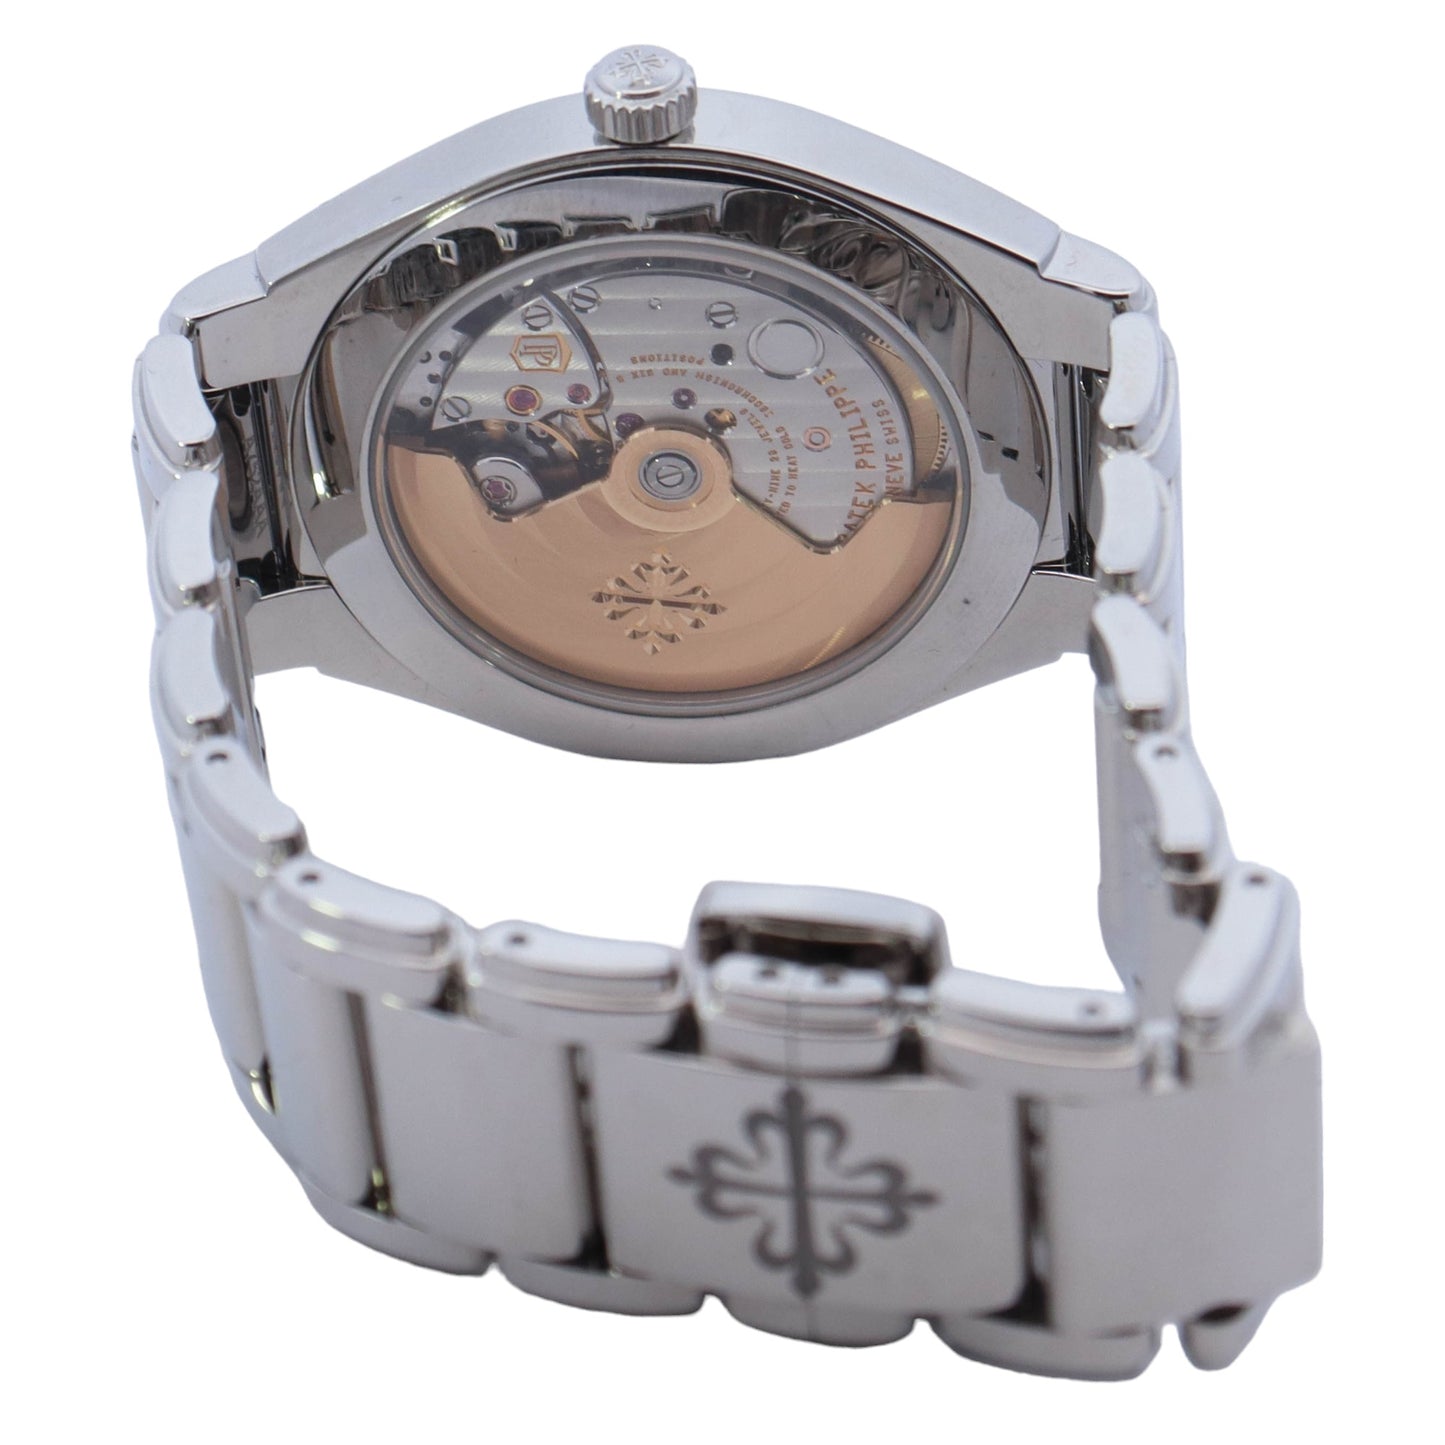 Patek Philippe Twenty-4 Stainless Steel 36mm Gray Sunburst Roman Dial Watch Reference# 7300/1200A-010 - Happy Jewelers Fine Jewelry Lifetime Warranty